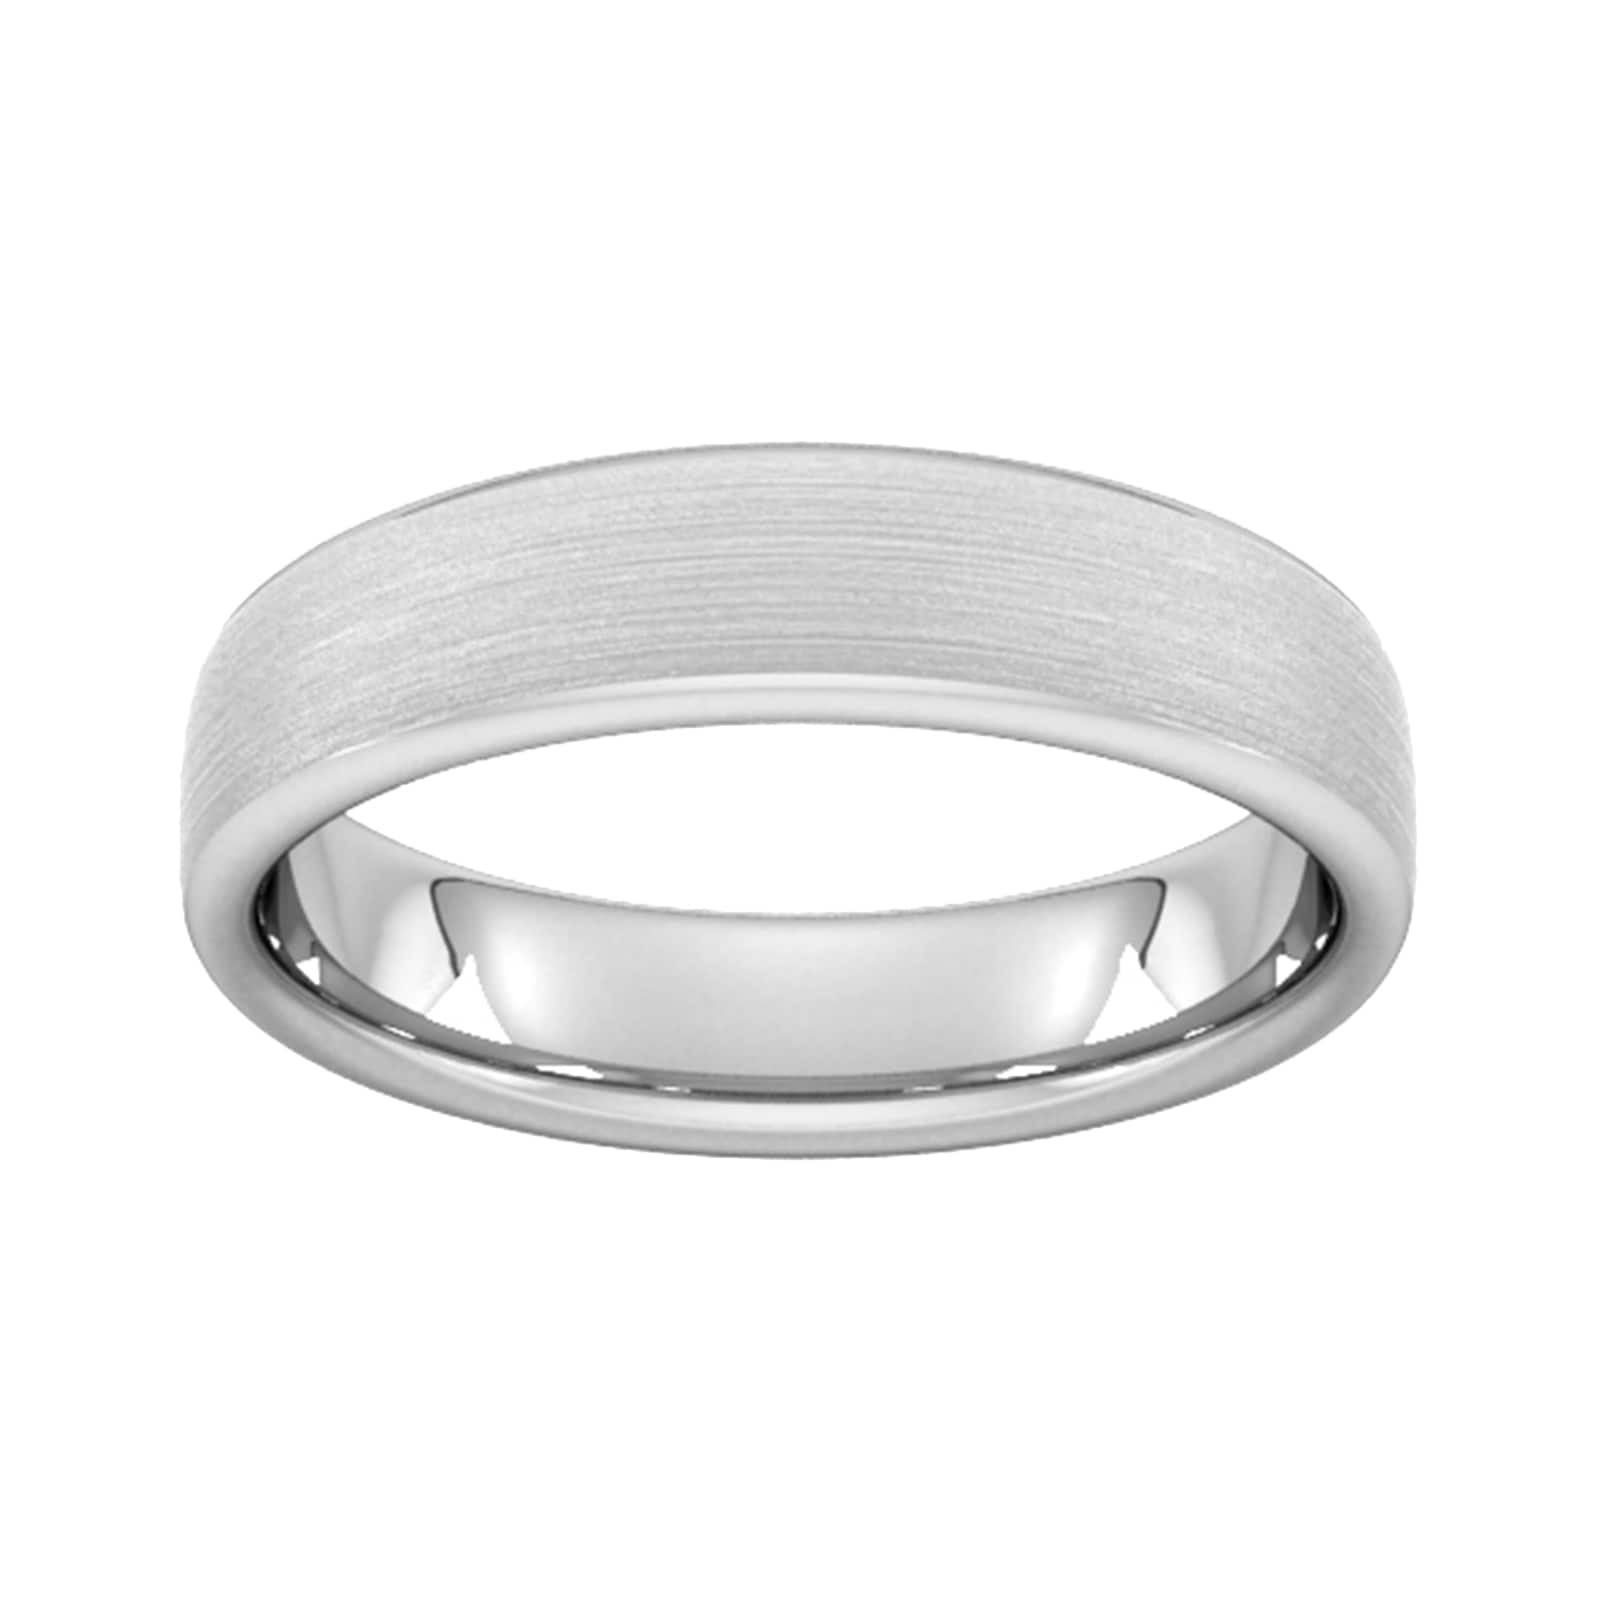 5mm D Shape Standard Matt Finished Wedding Ring In 9 Carat White Gold - Ring Size N